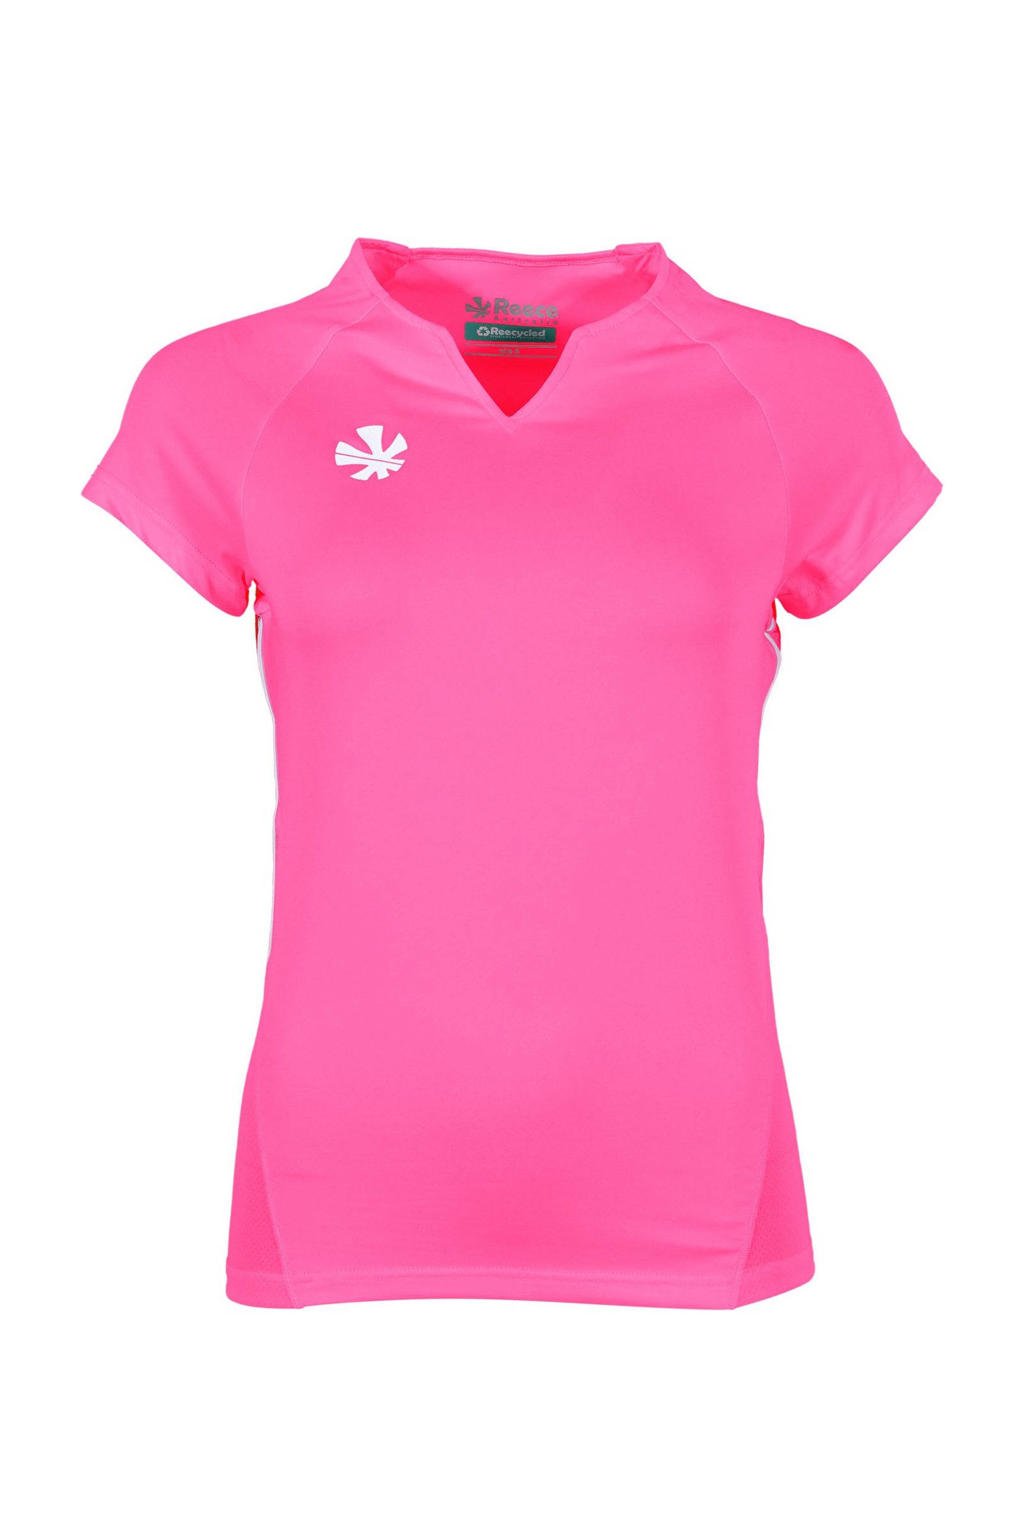 Roze meisjes Reece Australia sport T-shirt Rise van gerecycled polyester met logo dessin, korte mouwen en V-hals